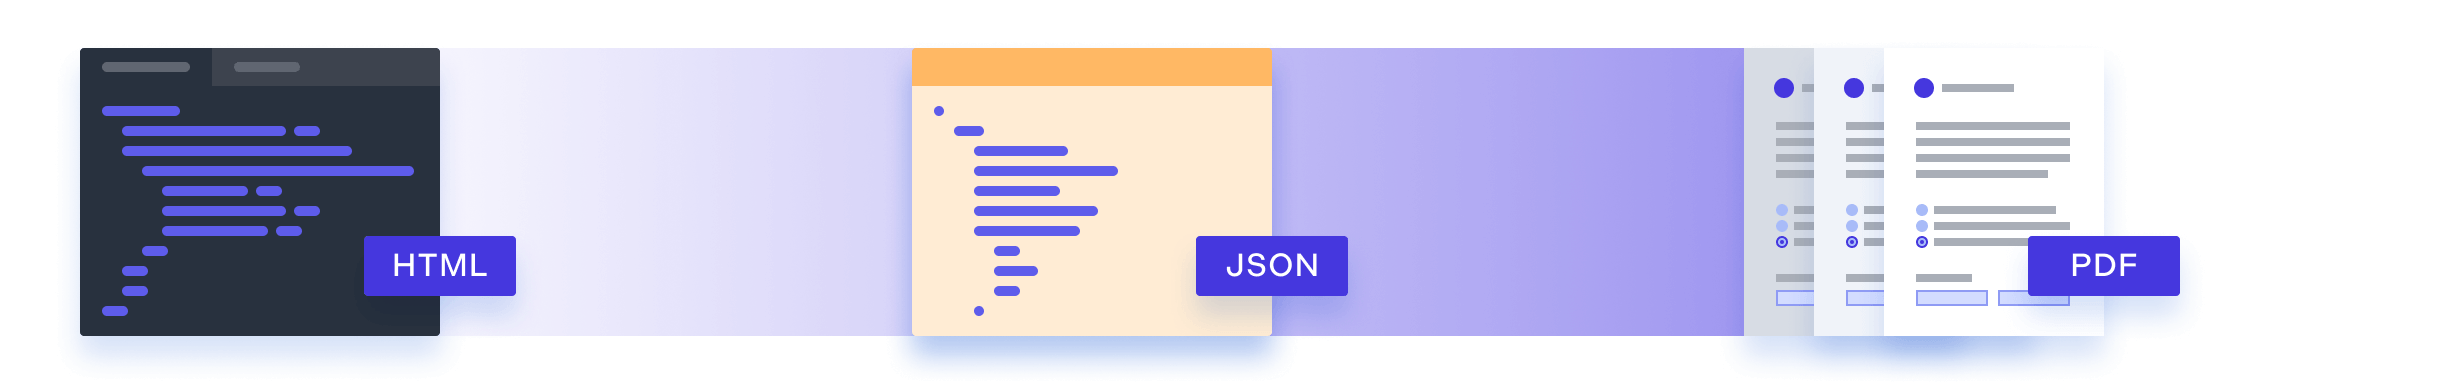 HTML, JSON, and PDF files